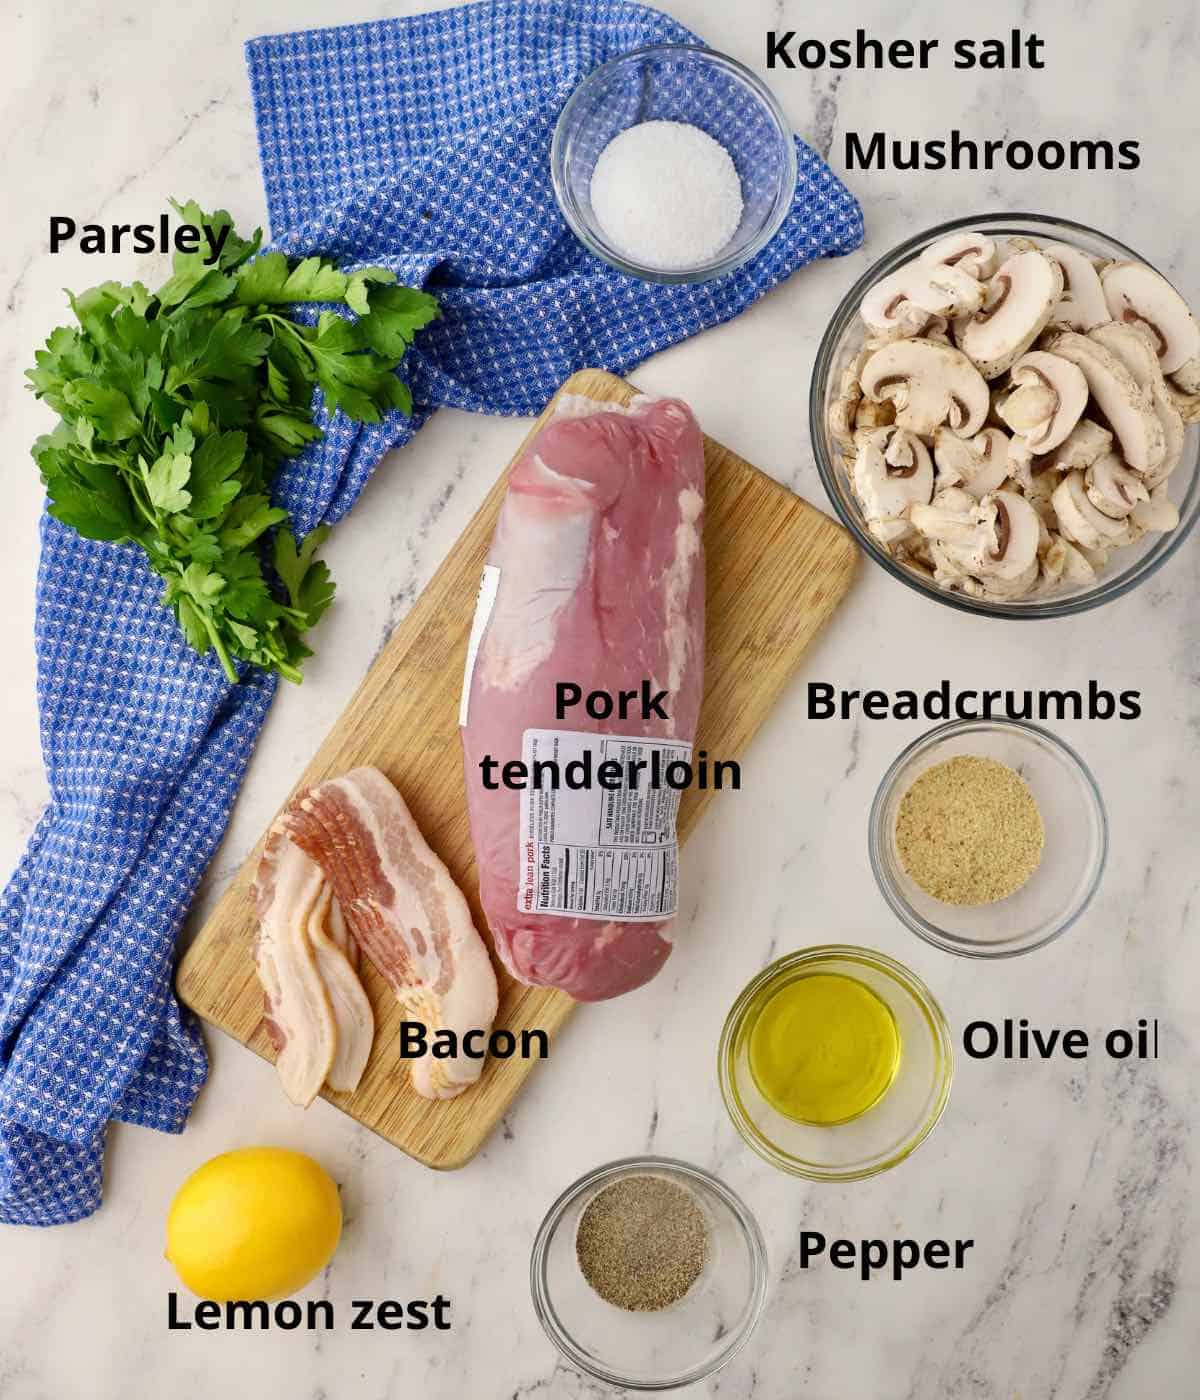 Ingredients for stuffed pork tenderloin including sliced mushrooms. 